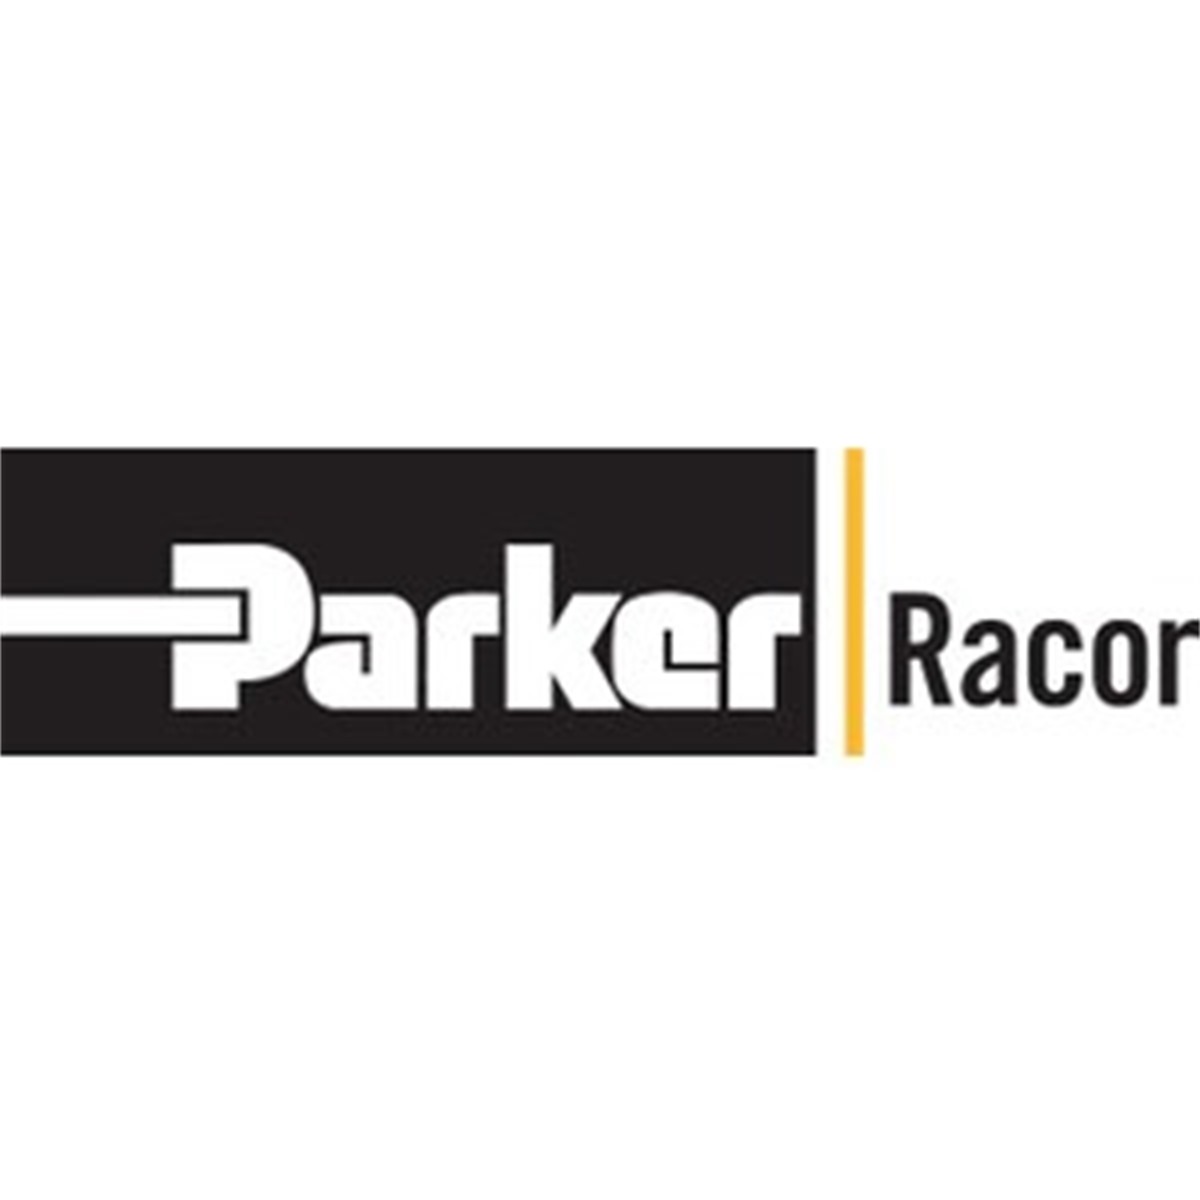 20 new-parker-racor-logo-croped-5 10946017  Thumbnail0